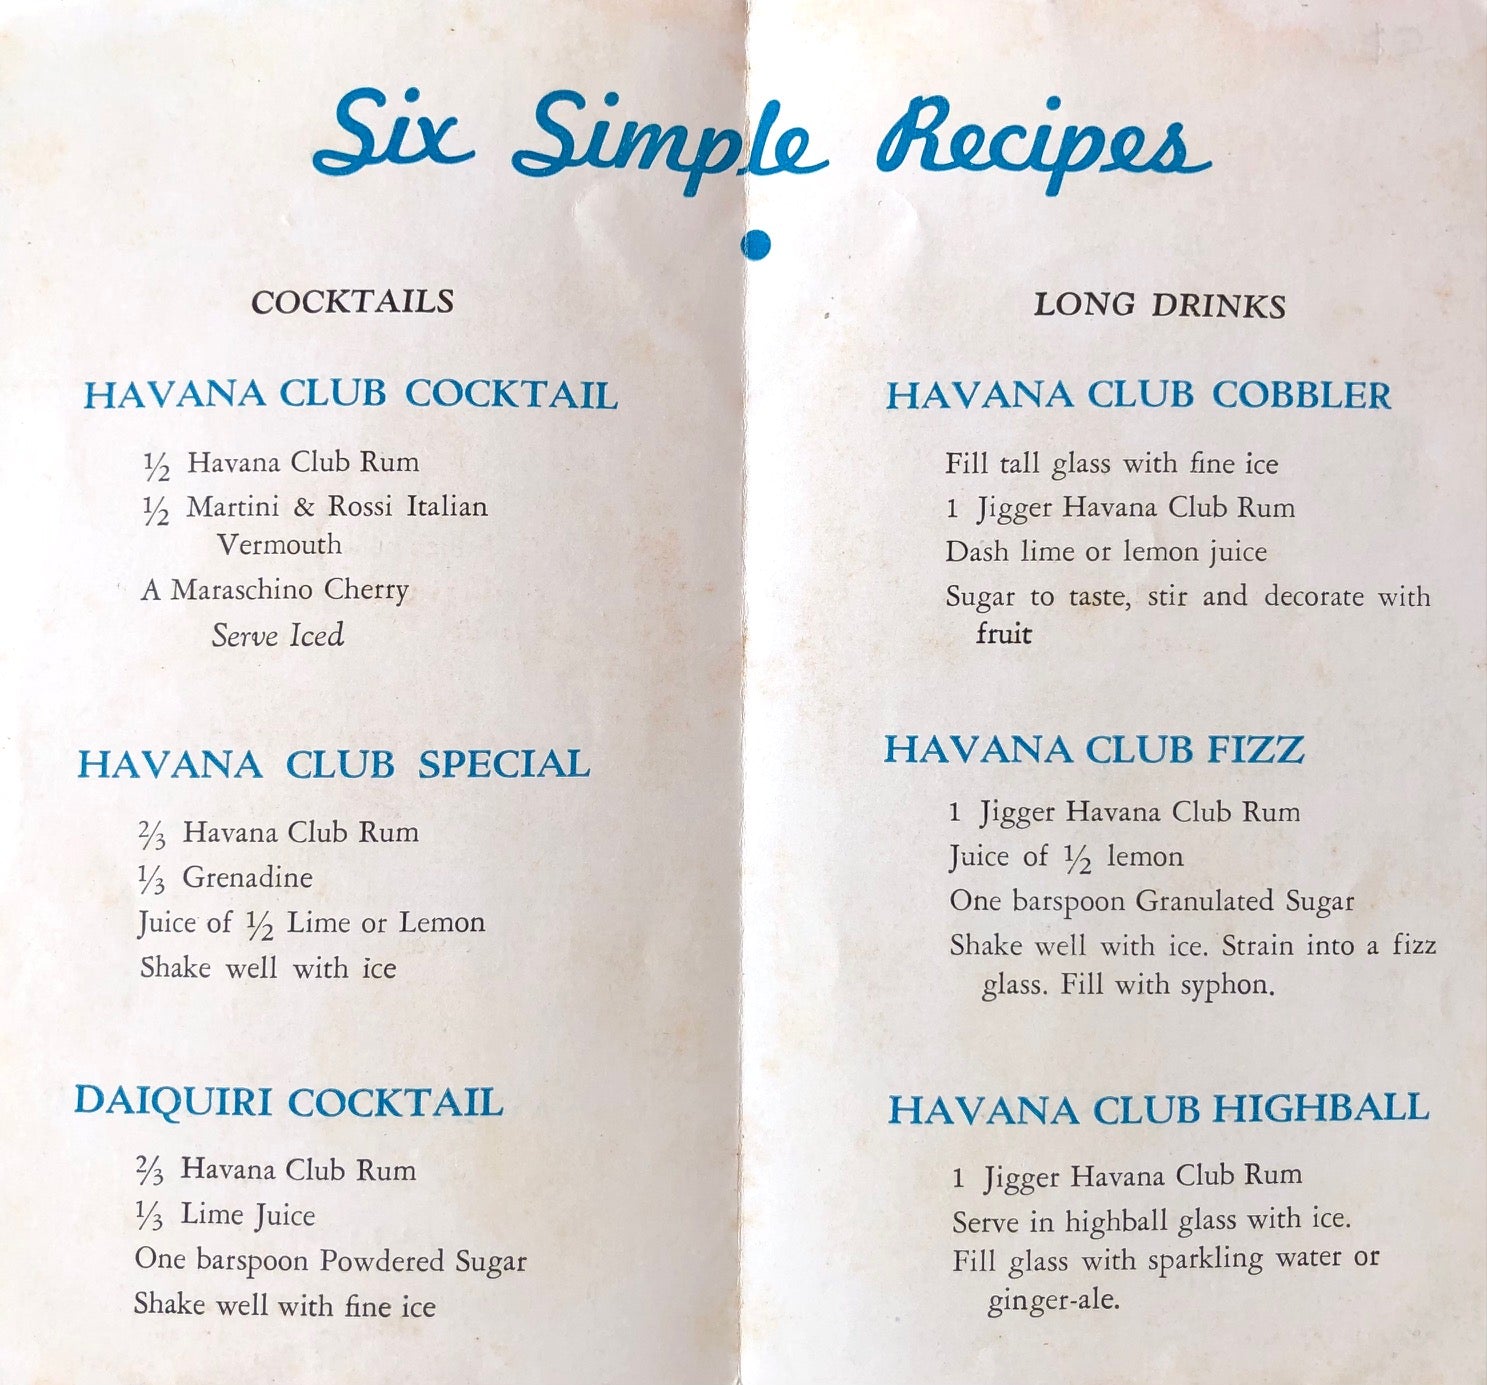 (Cocktails - Cuban) Havana Club Rum: A Few Suggestions for Rum Drinks Popular in Cuba.